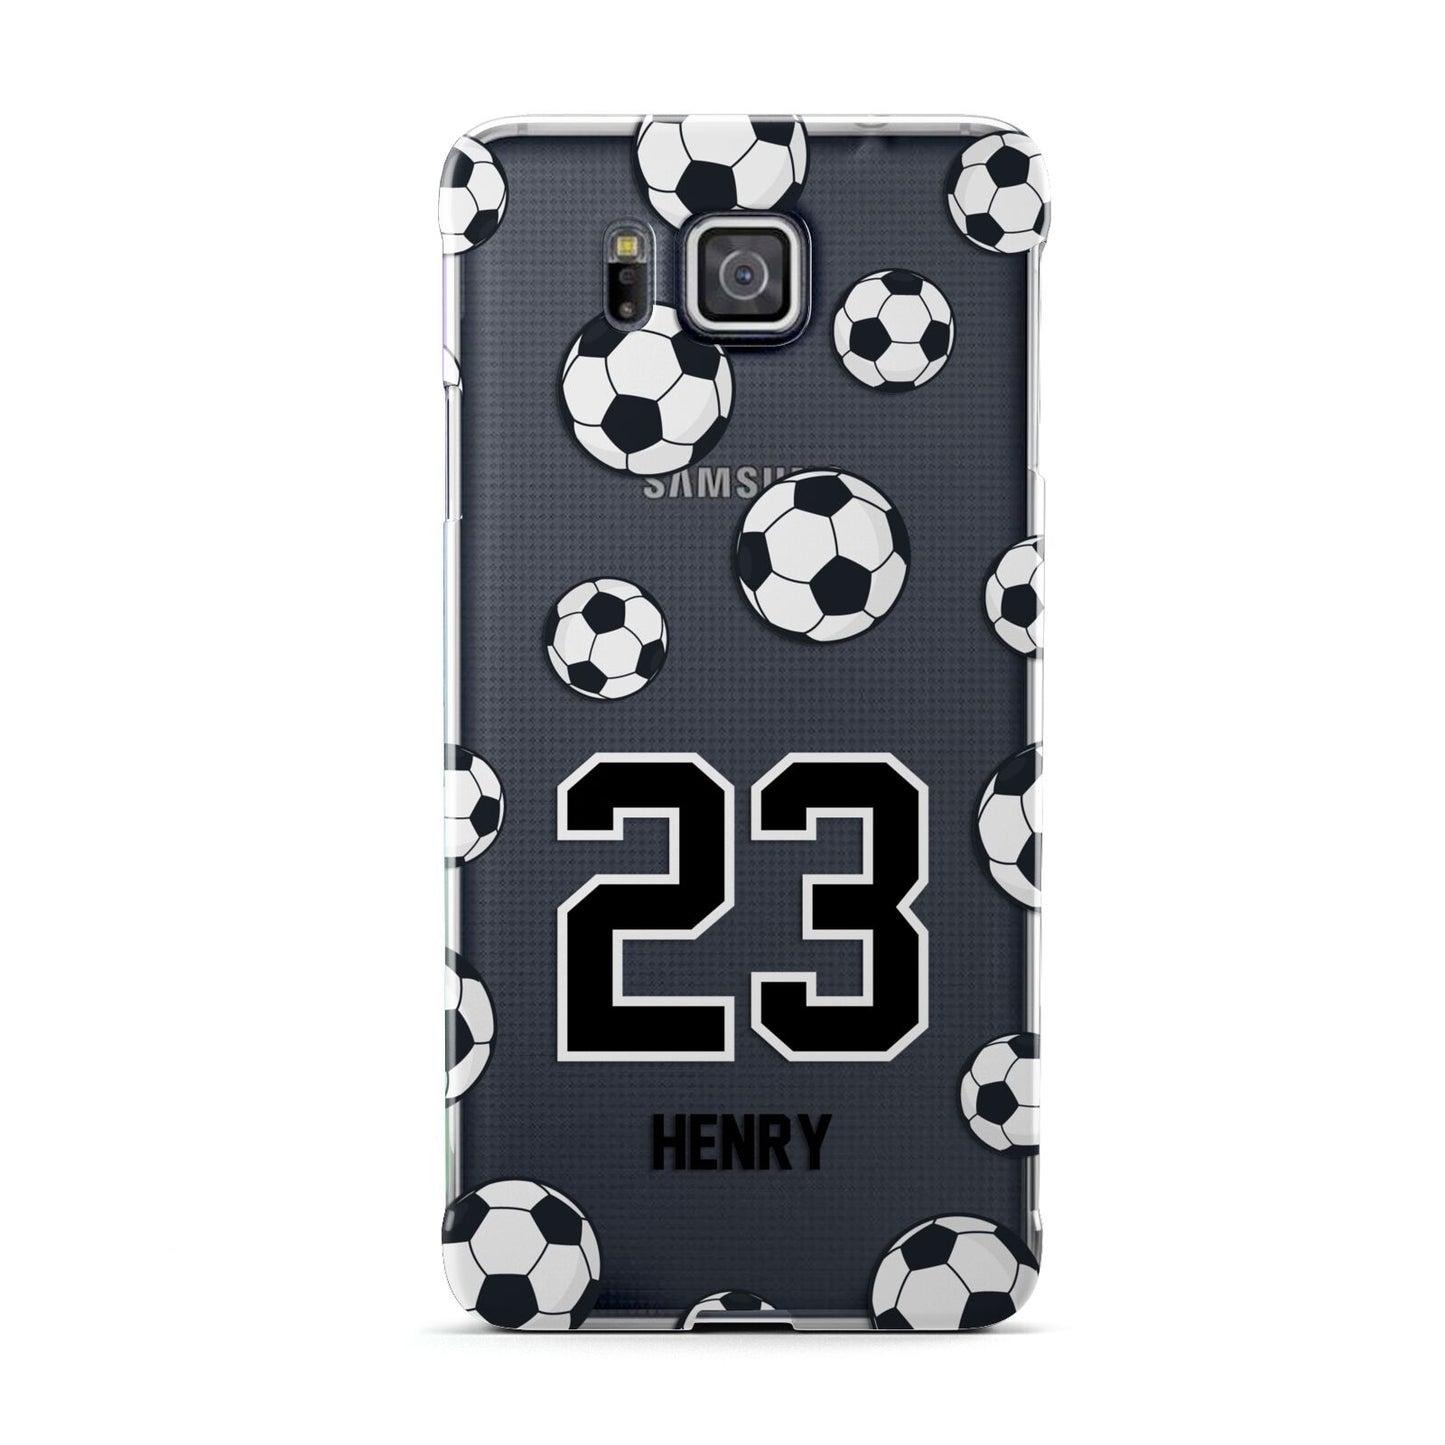 Personalised Football Samsung Galaxy Alpha Case